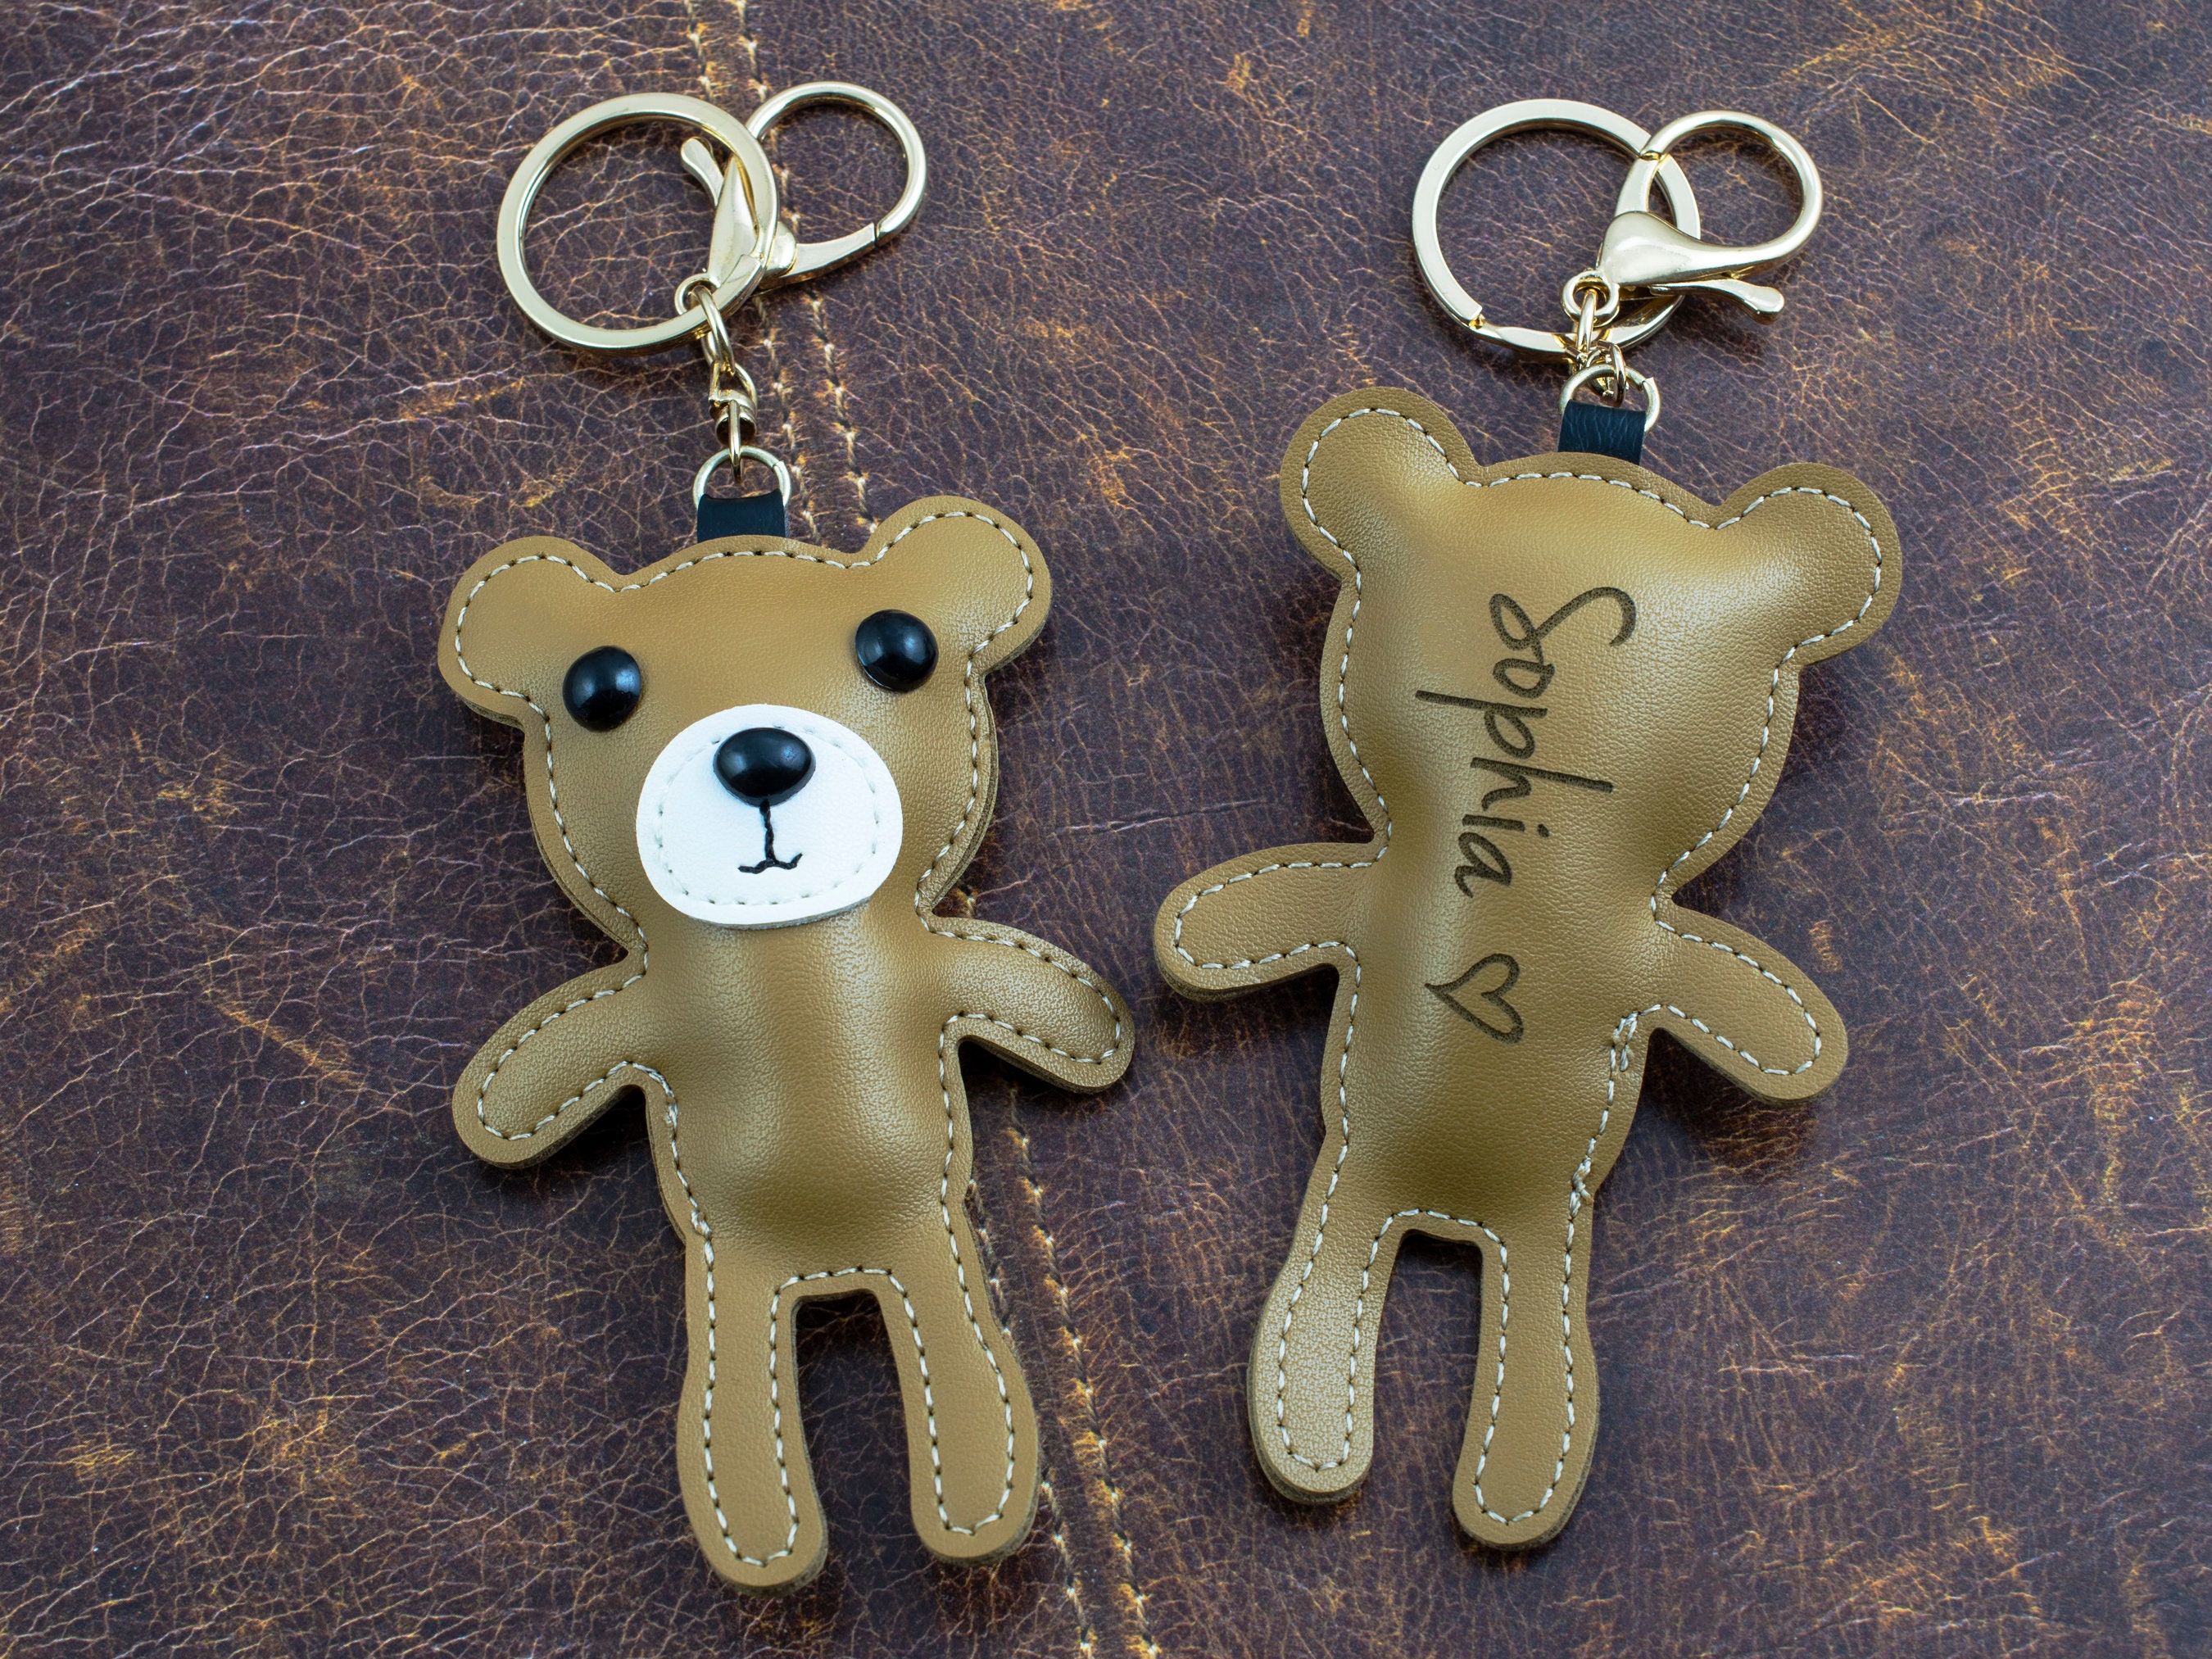 Cartoon Resin Bow Tie Bear Doll Keychain Fashion Cute Bear Keyring Women  Bag Key Chain Pendant Creative Car Key Ring Trinkets